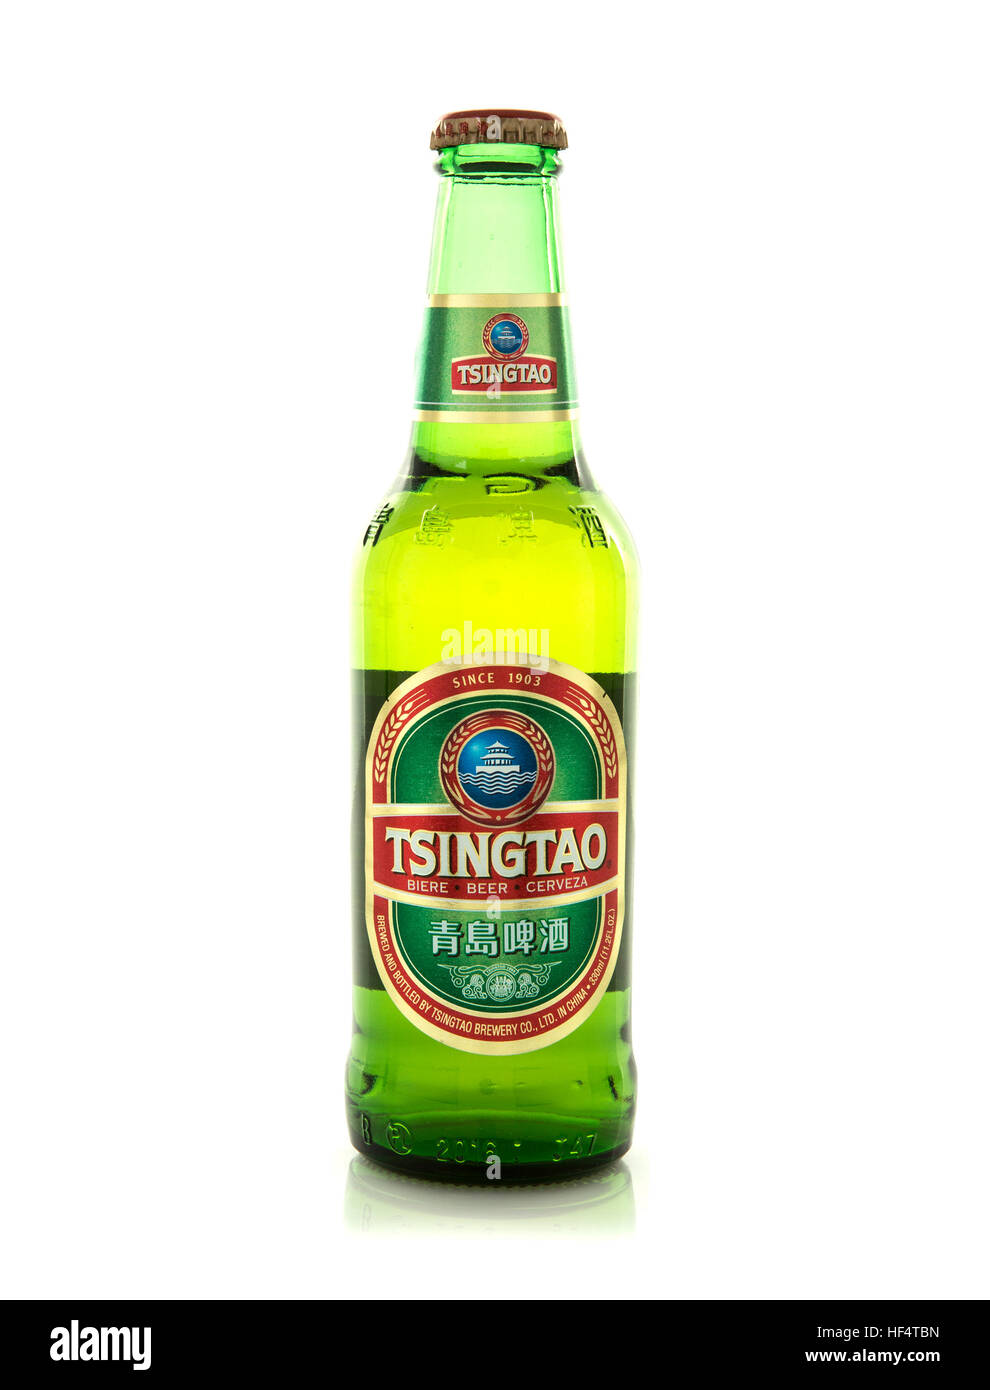 330ml Bottle of Tsingtao Beer on white background, Tsingtao Beer comes from China Stock Photo